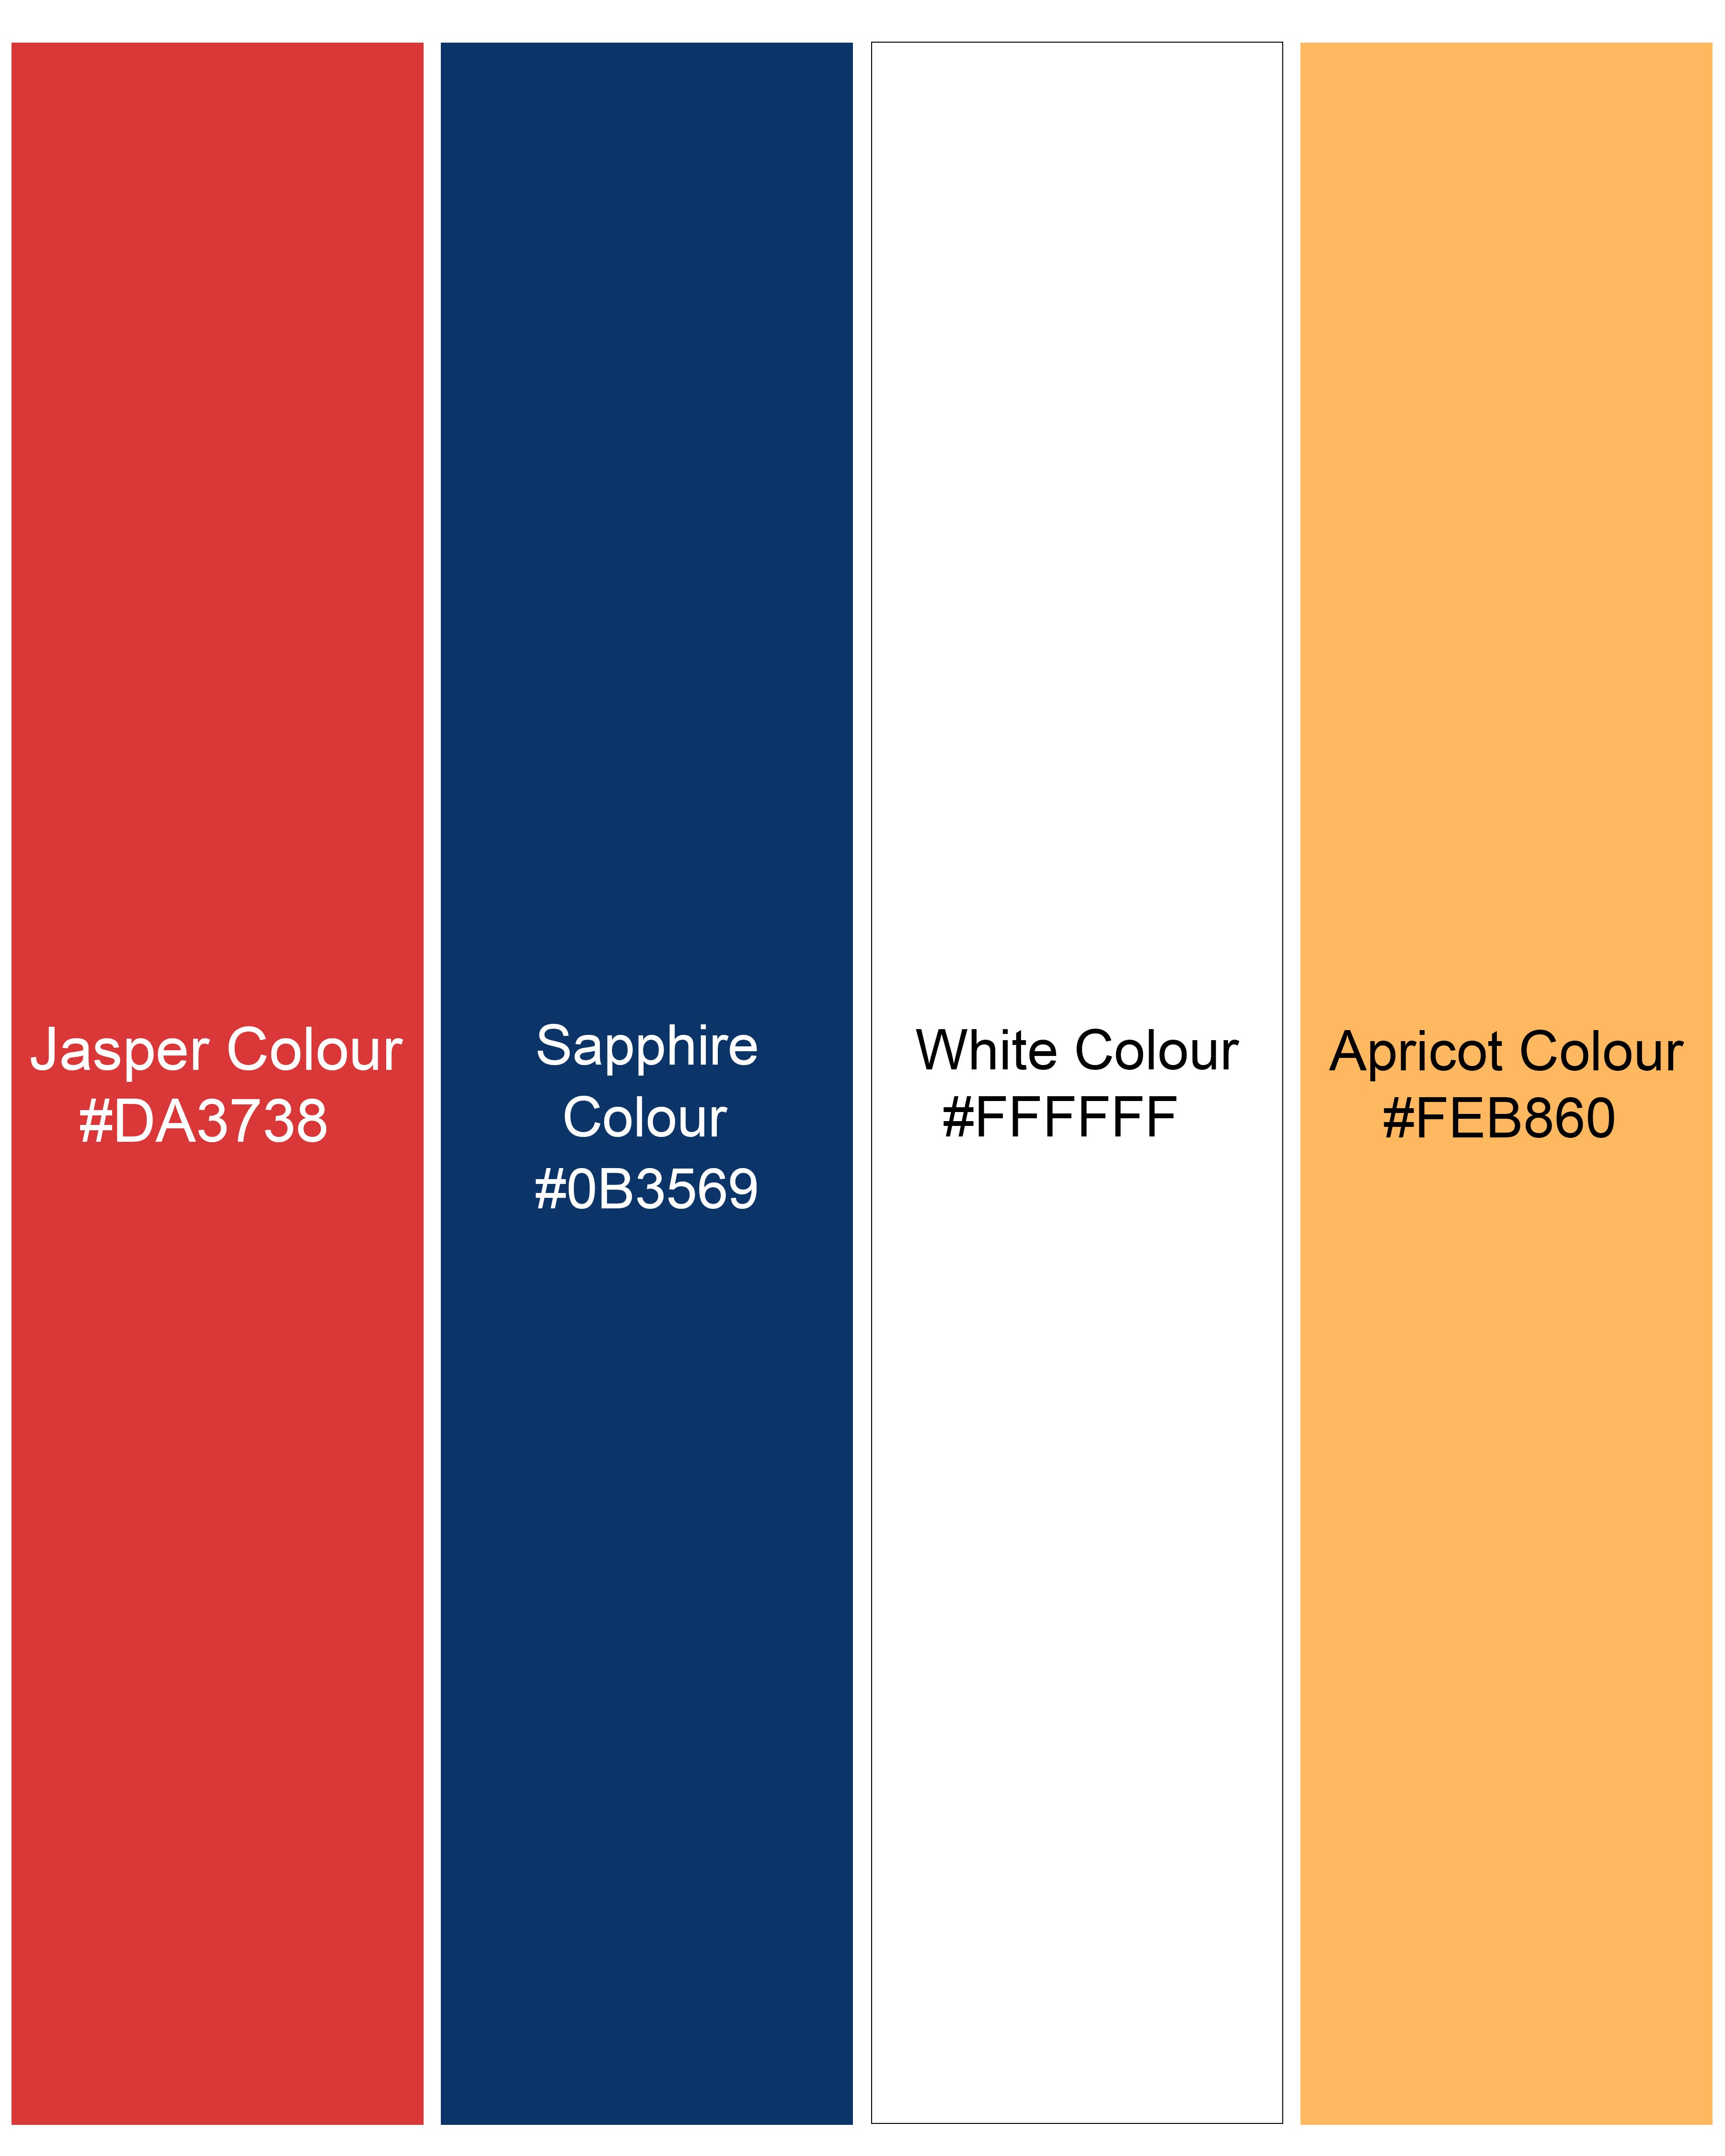 Jasper Red with Sapphire Blue Hexagonal Design Super Soft Premium Cotton Shirt 9142-38,9142-H-38,9142-39,9142-H-39,9142-40,9142-H-40,9142-42,9142-H-42,9142-44,9142-H-44,9142-46,9142-H-46,9142-48,9142-H-48,9142-50,9142-H-50,9142-52,9142-H-52